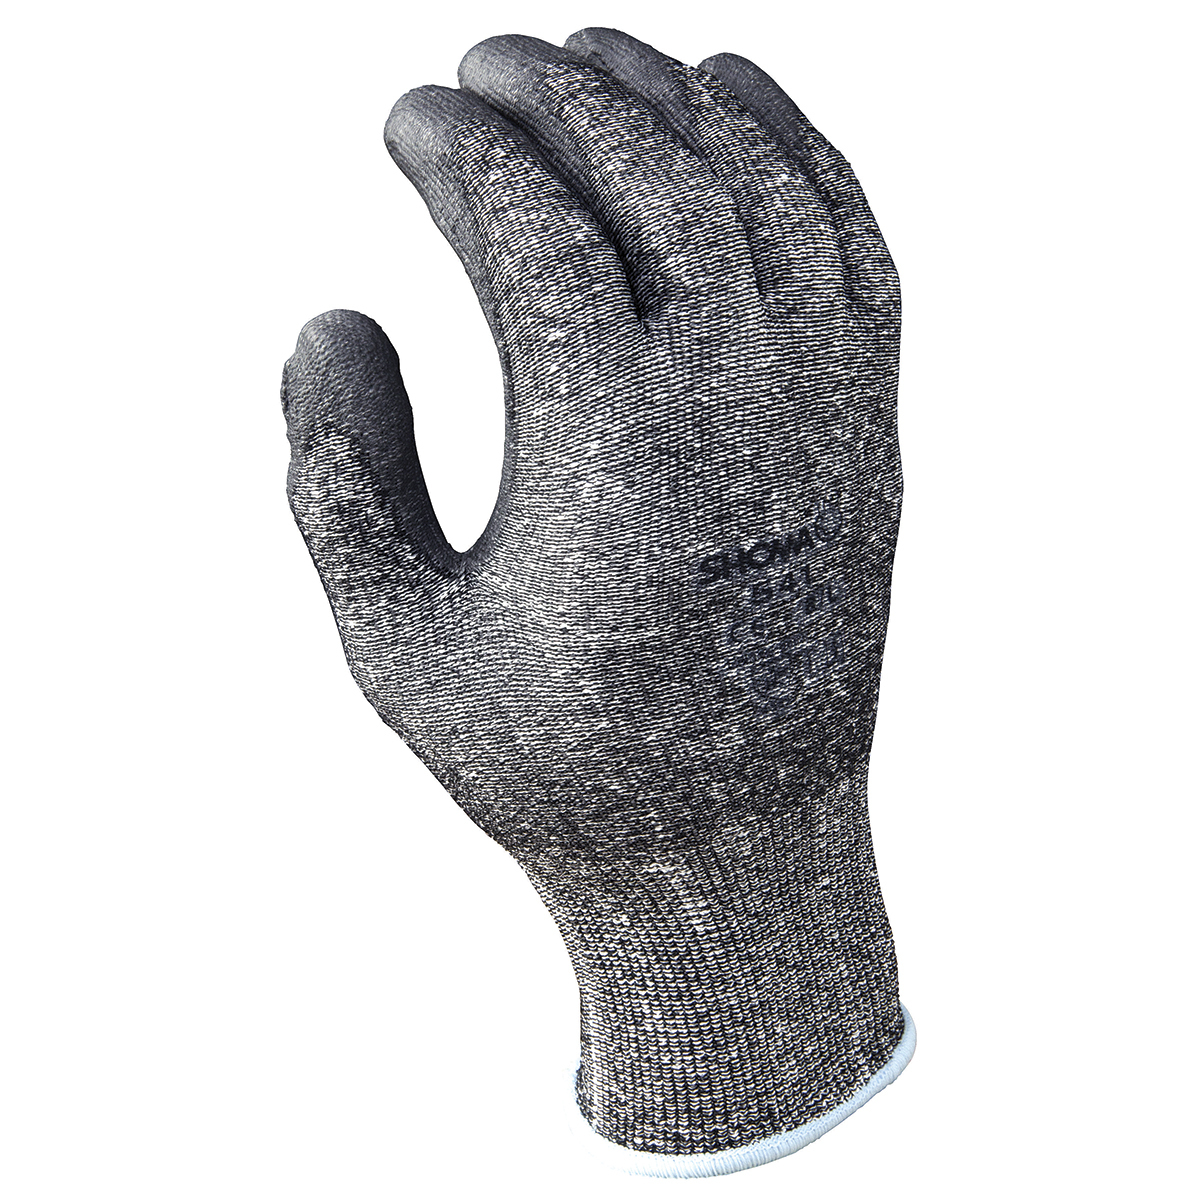 SHOWA® 541 13 Gauge High Performance Polyethylene Cut Resistant Gloves With Polyurethane Coating